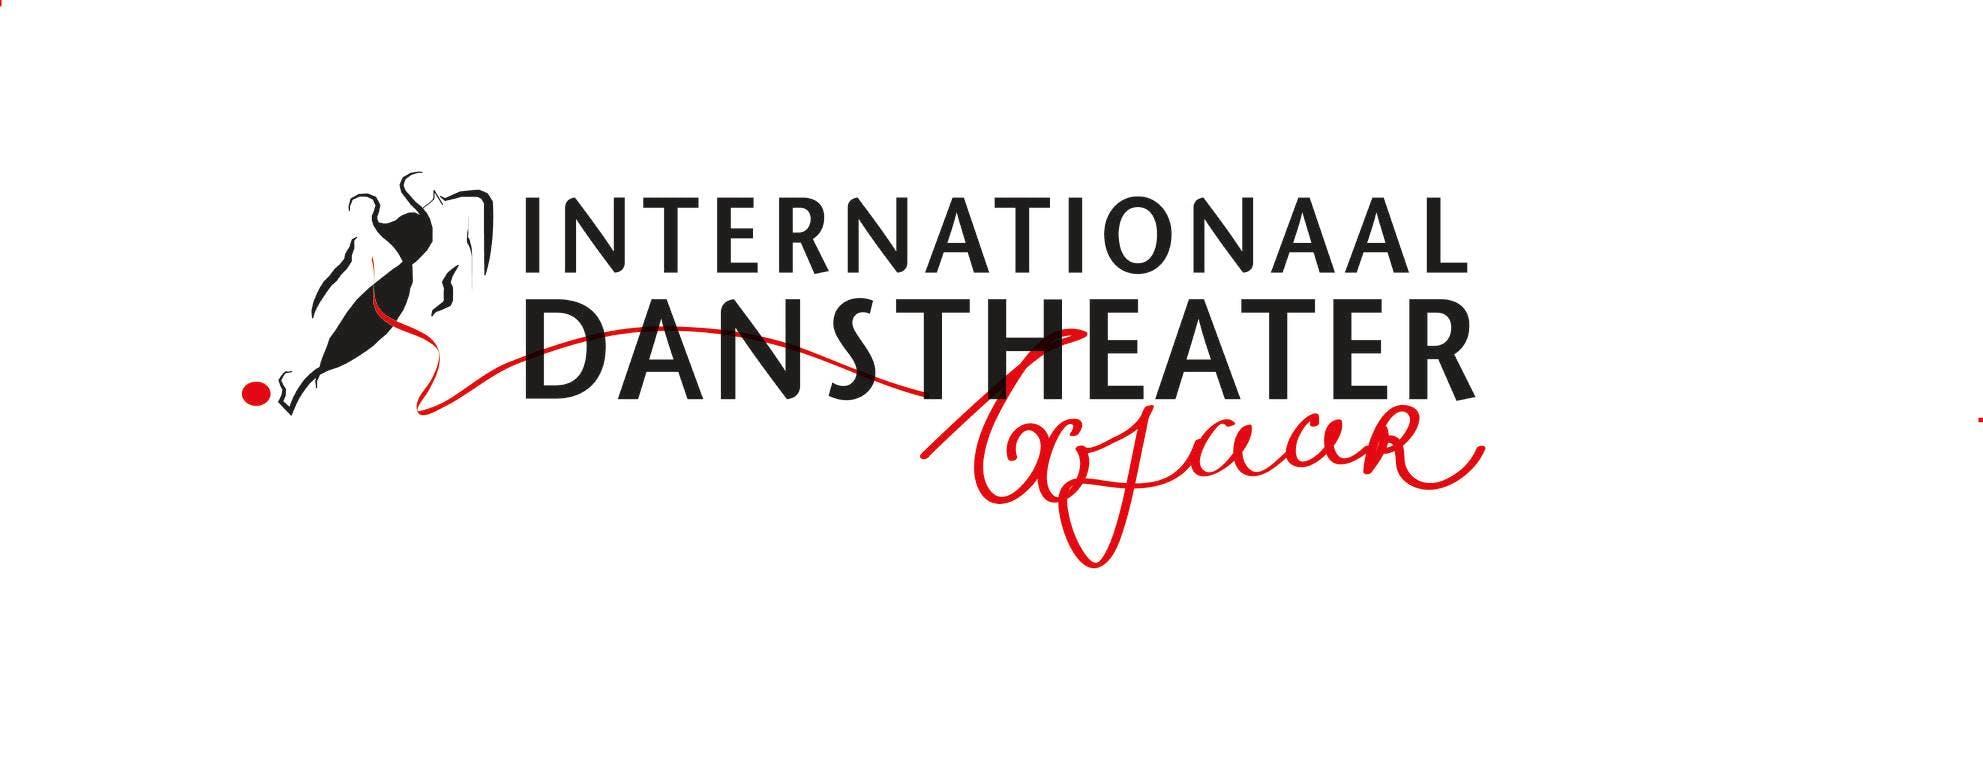 Internationaal Danstheater